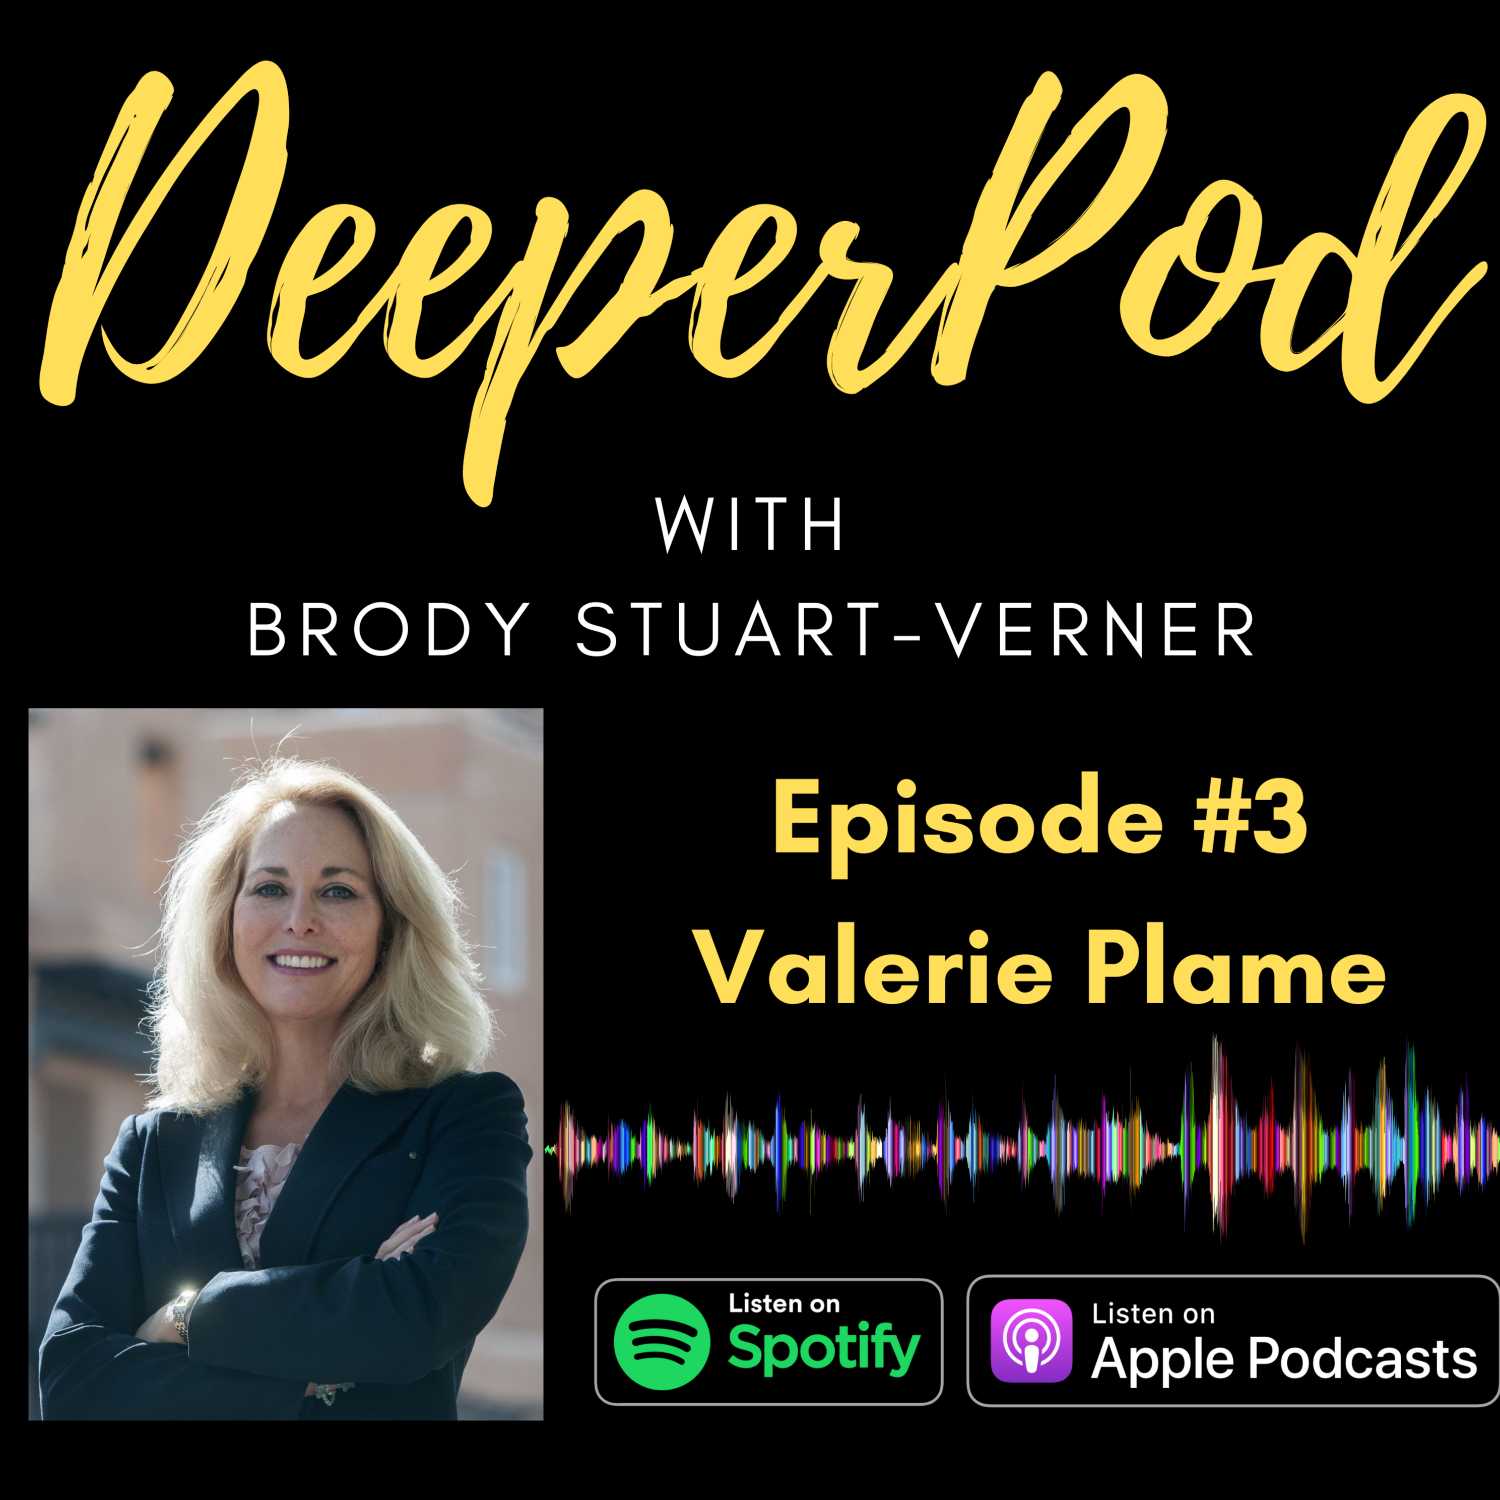 DeeperPod #3: Valerie Plame